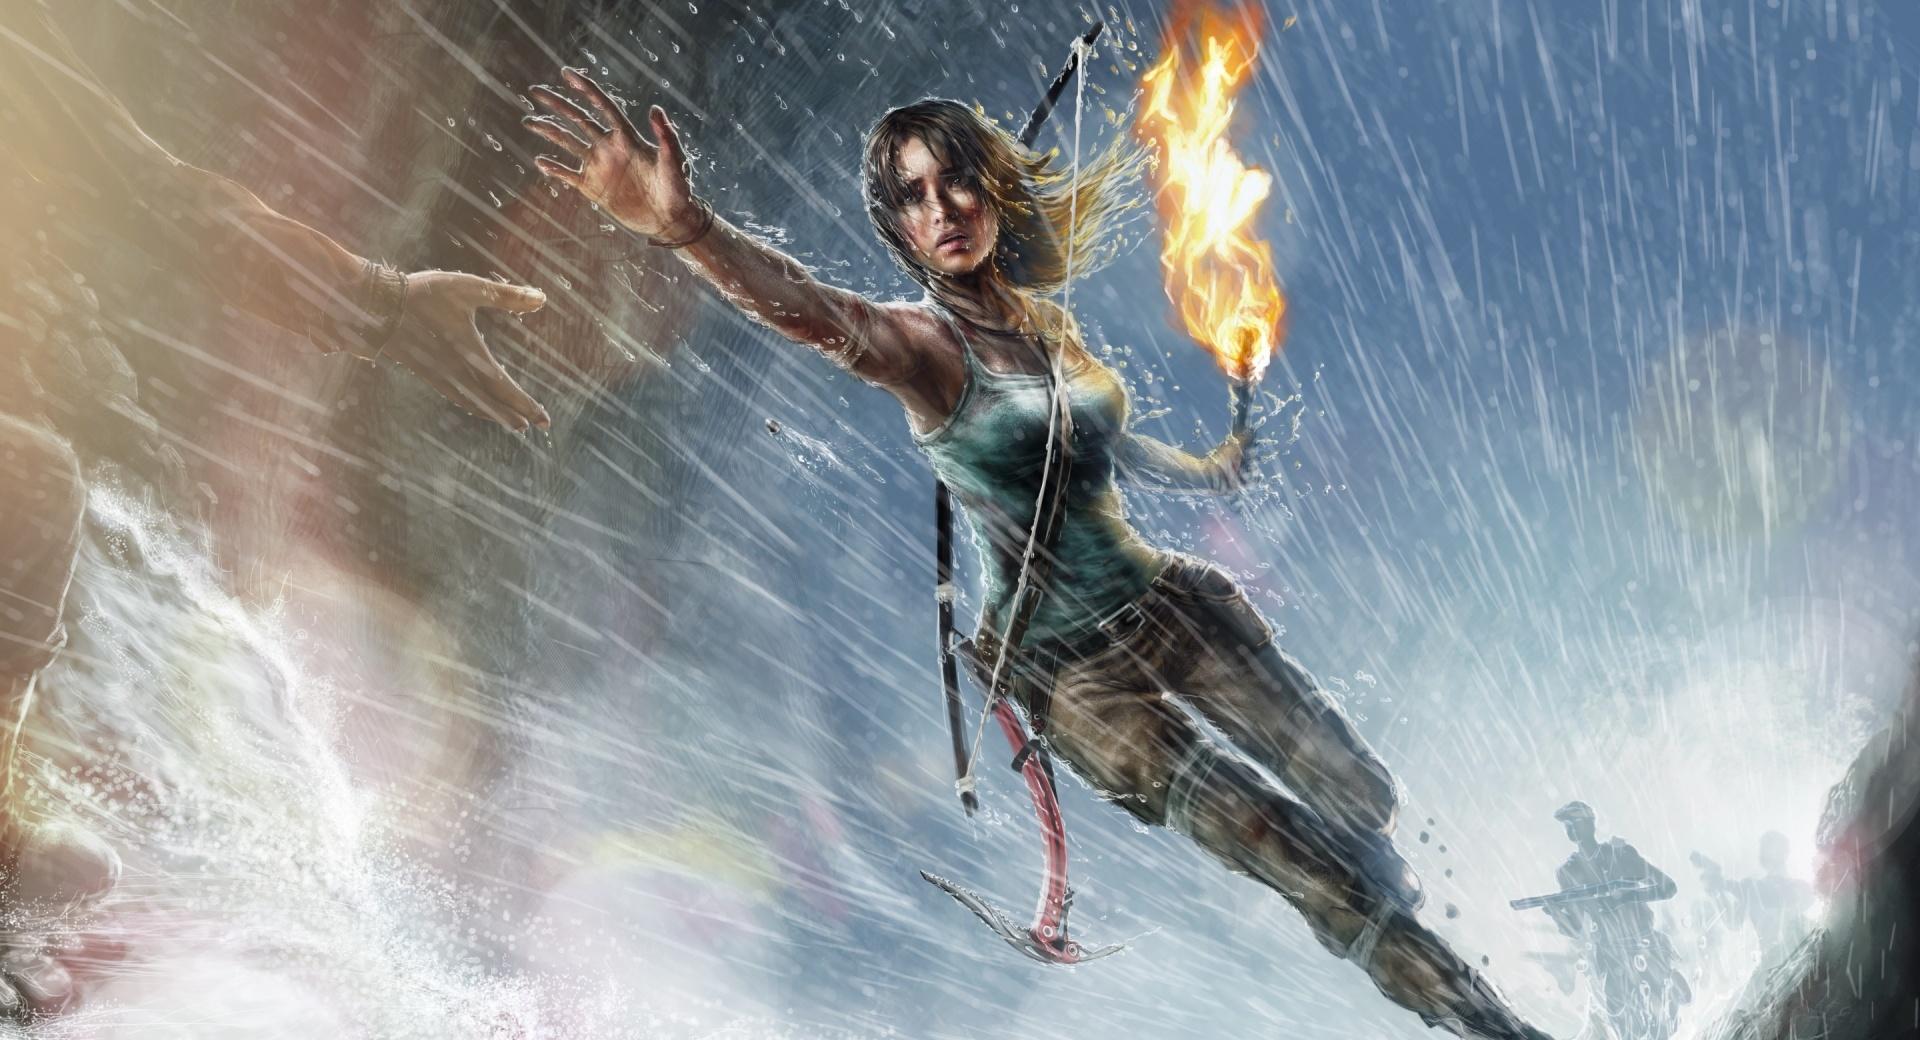 Lara Croft Game Rain at 2048 x 2048 iPad size wallpapers HD quality